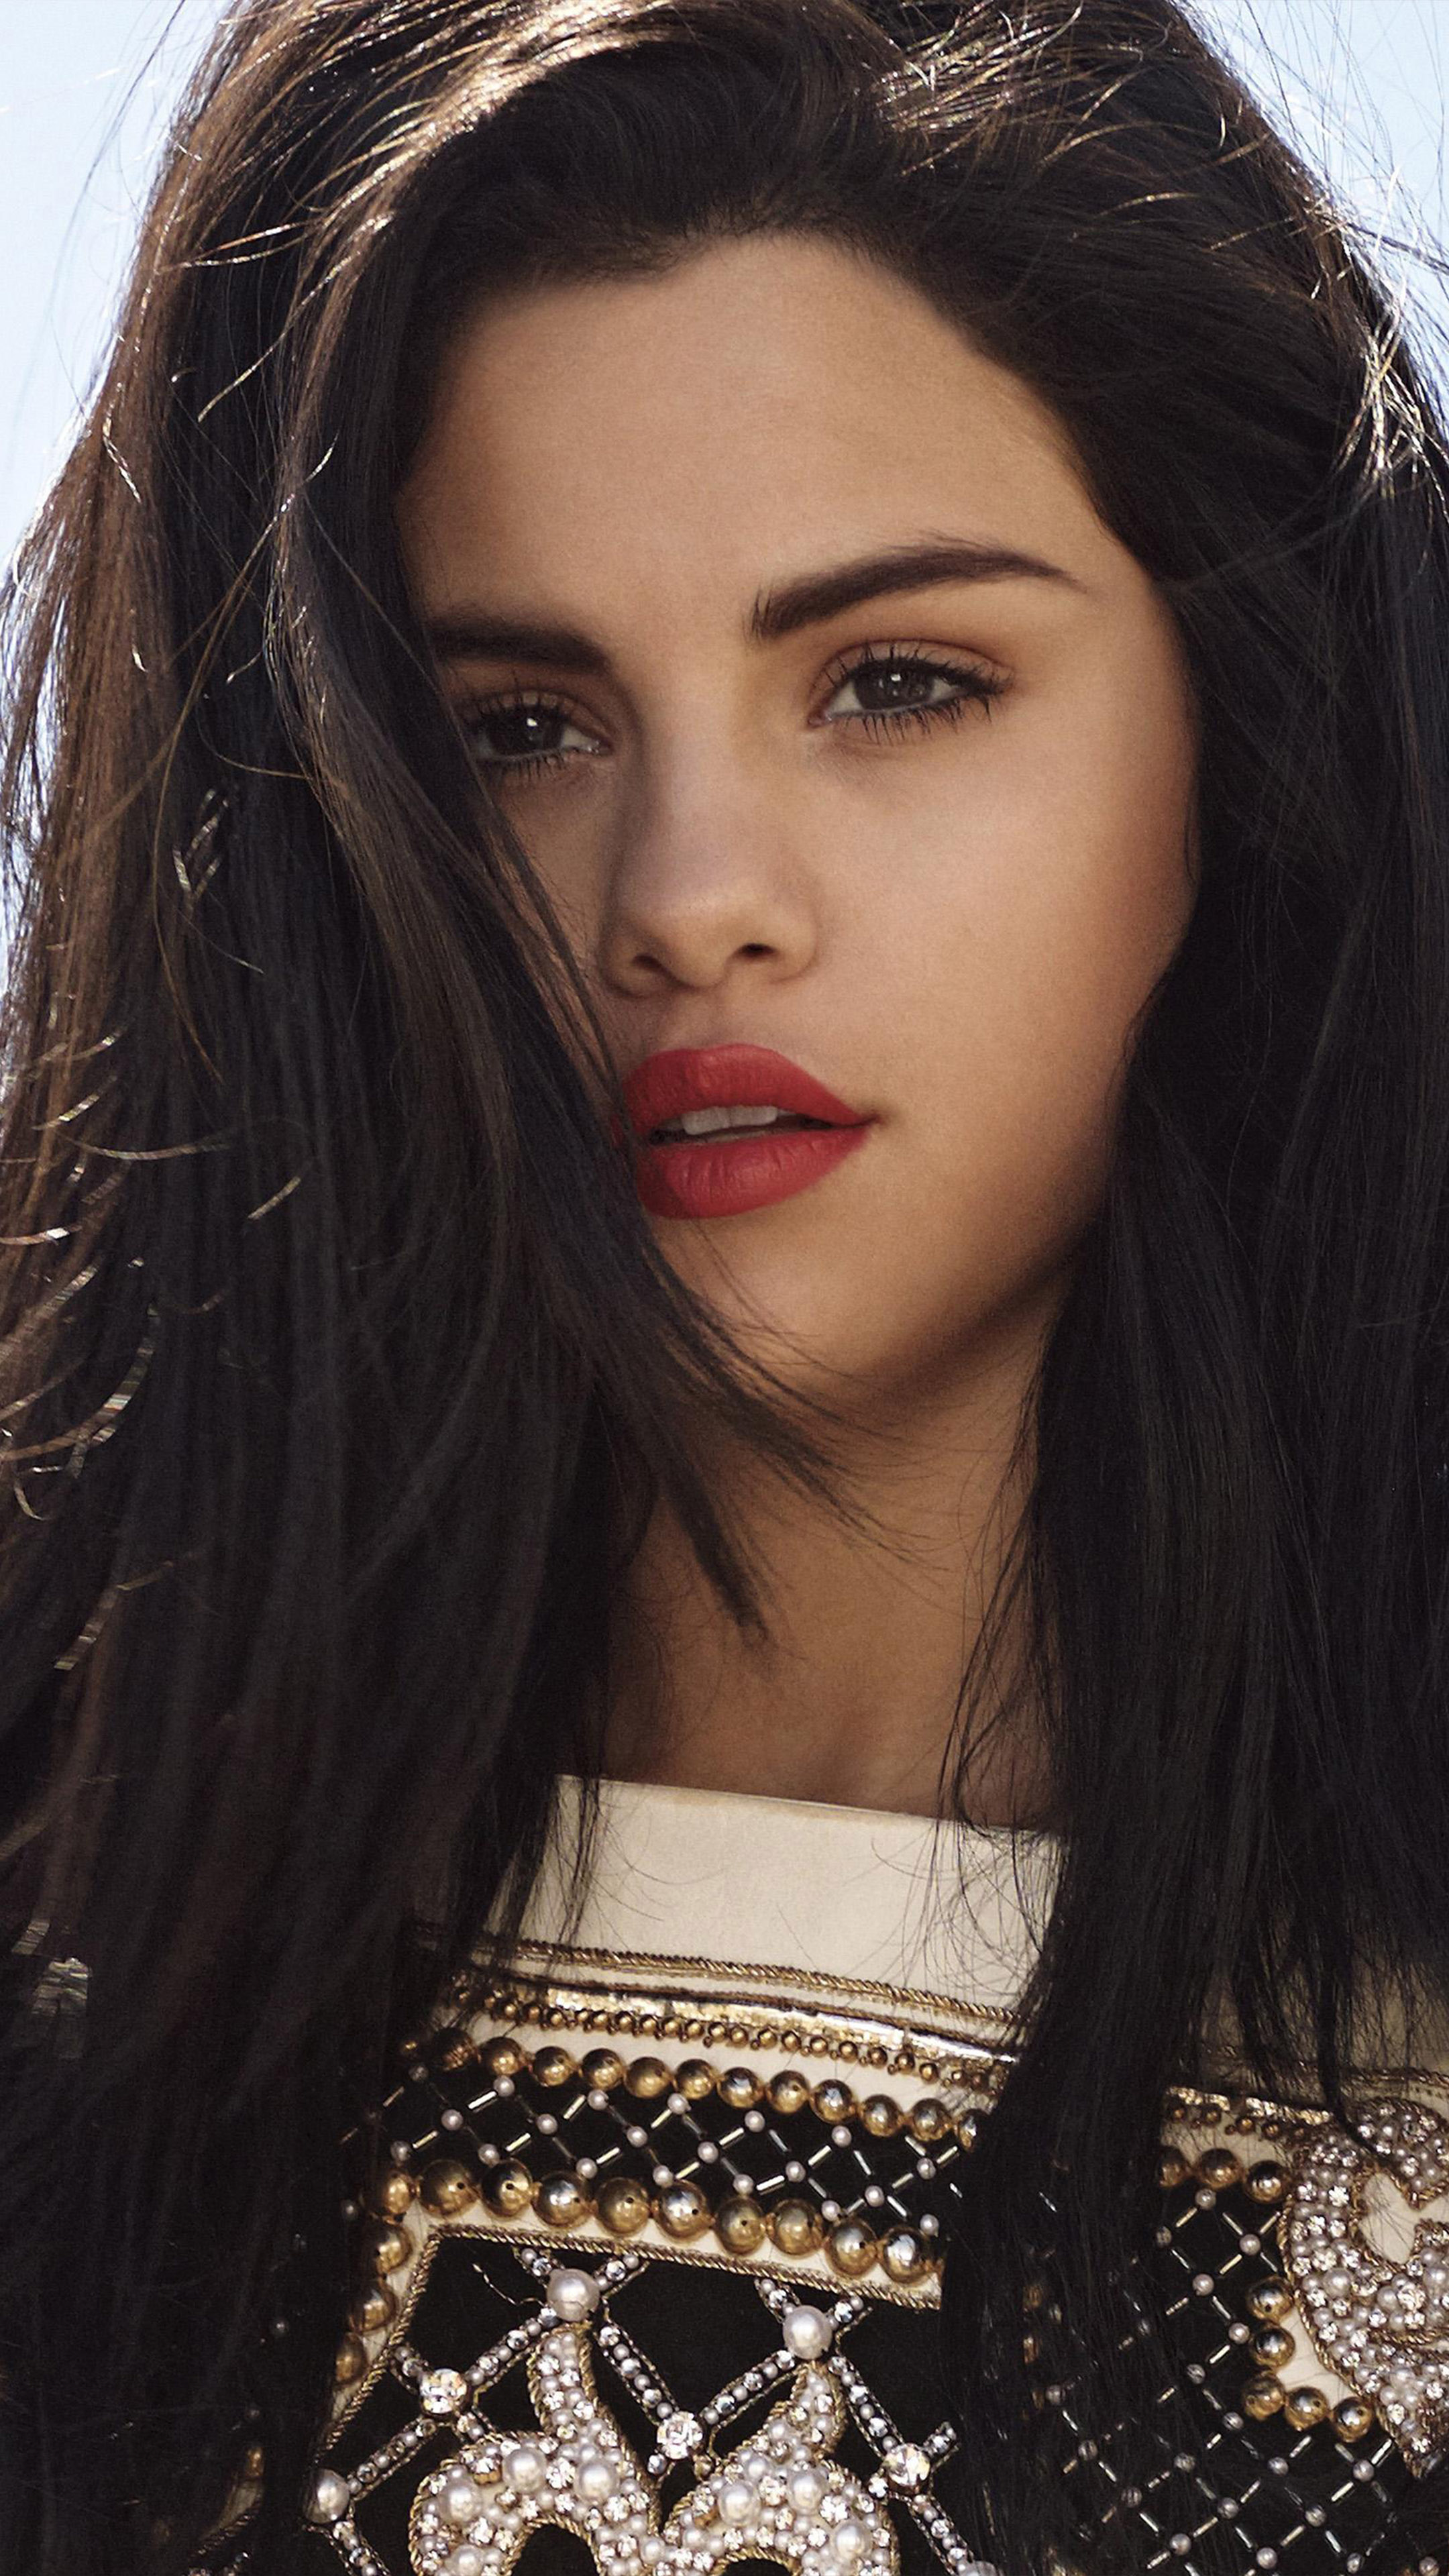 Beautiful Singer Song Writer Selena Gomez 4k Ultra Hd Mobile Wallpaper